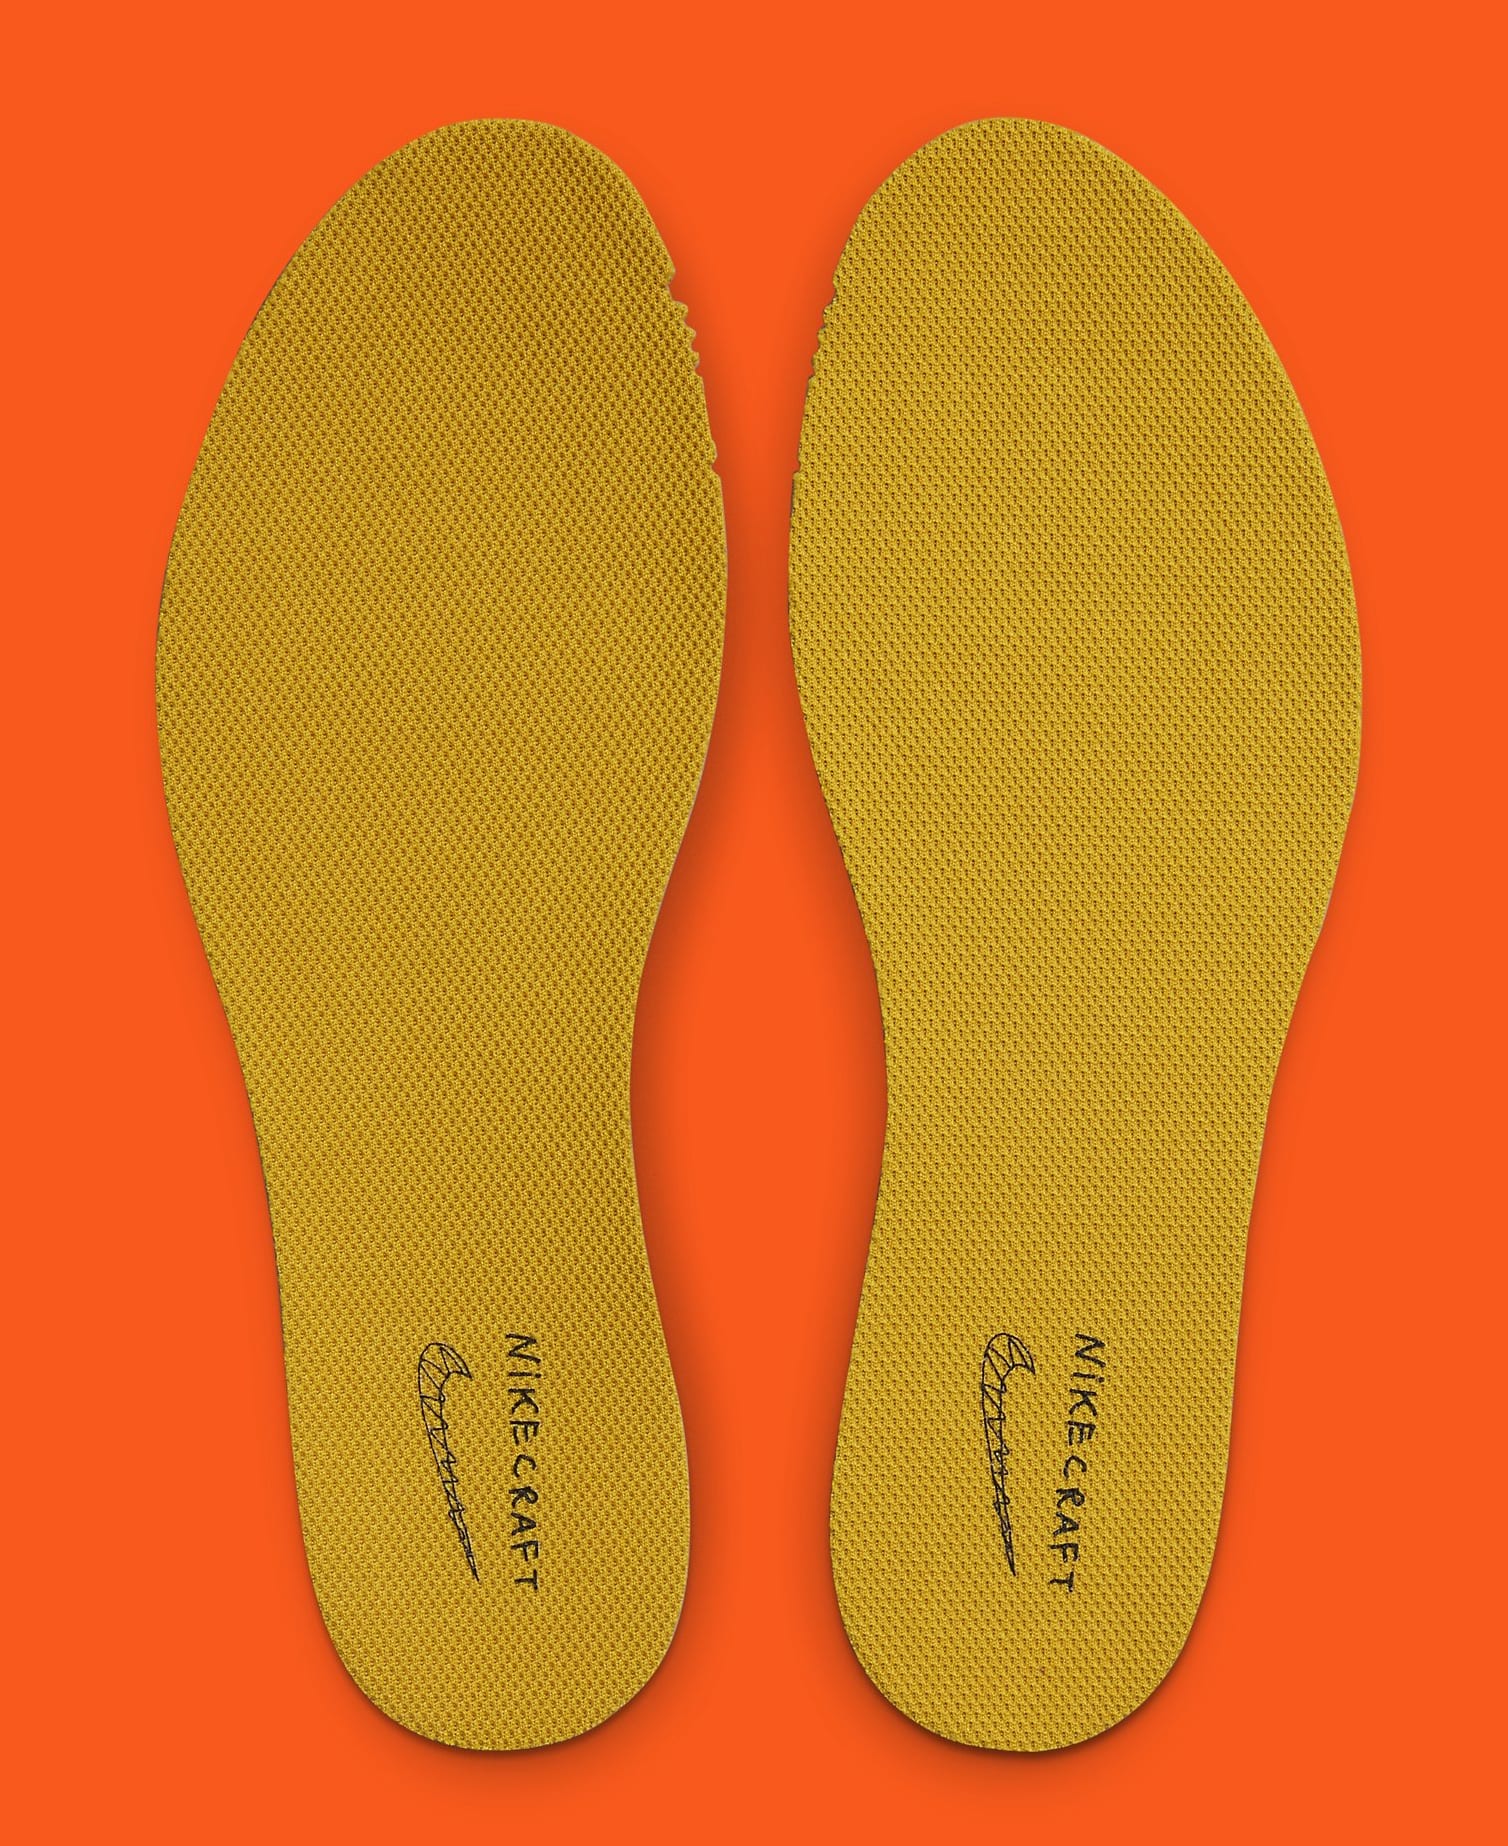 Tom Sachs x Nike General Purpose Shoe 'Dark Sulfur' DA6672 700 Insole